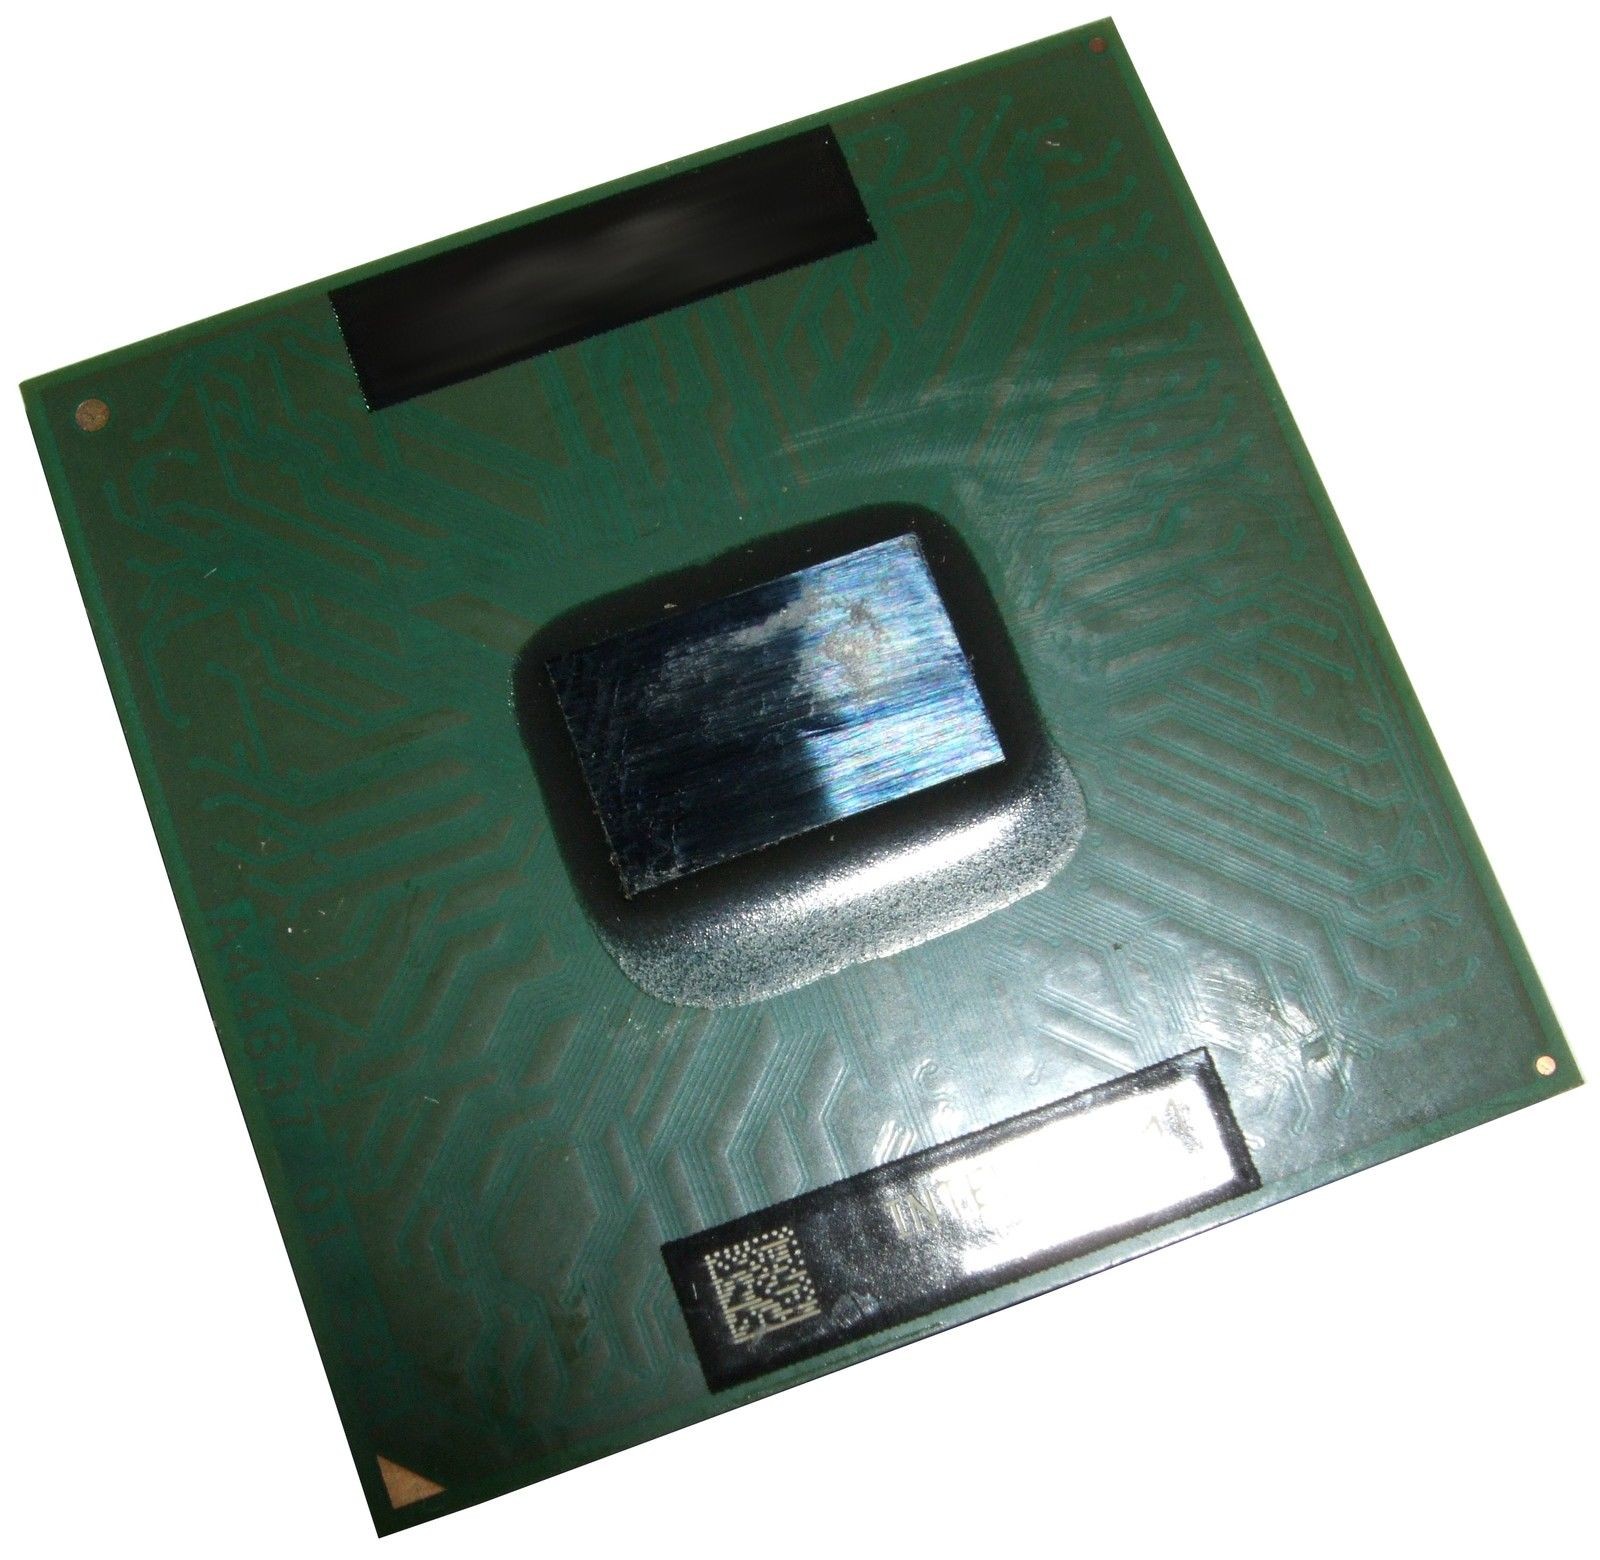 500030885-Intel Core 2 Duo Mobile T200 SL9SF 2Ghz 4M 667Mhz Socket M Processor-image